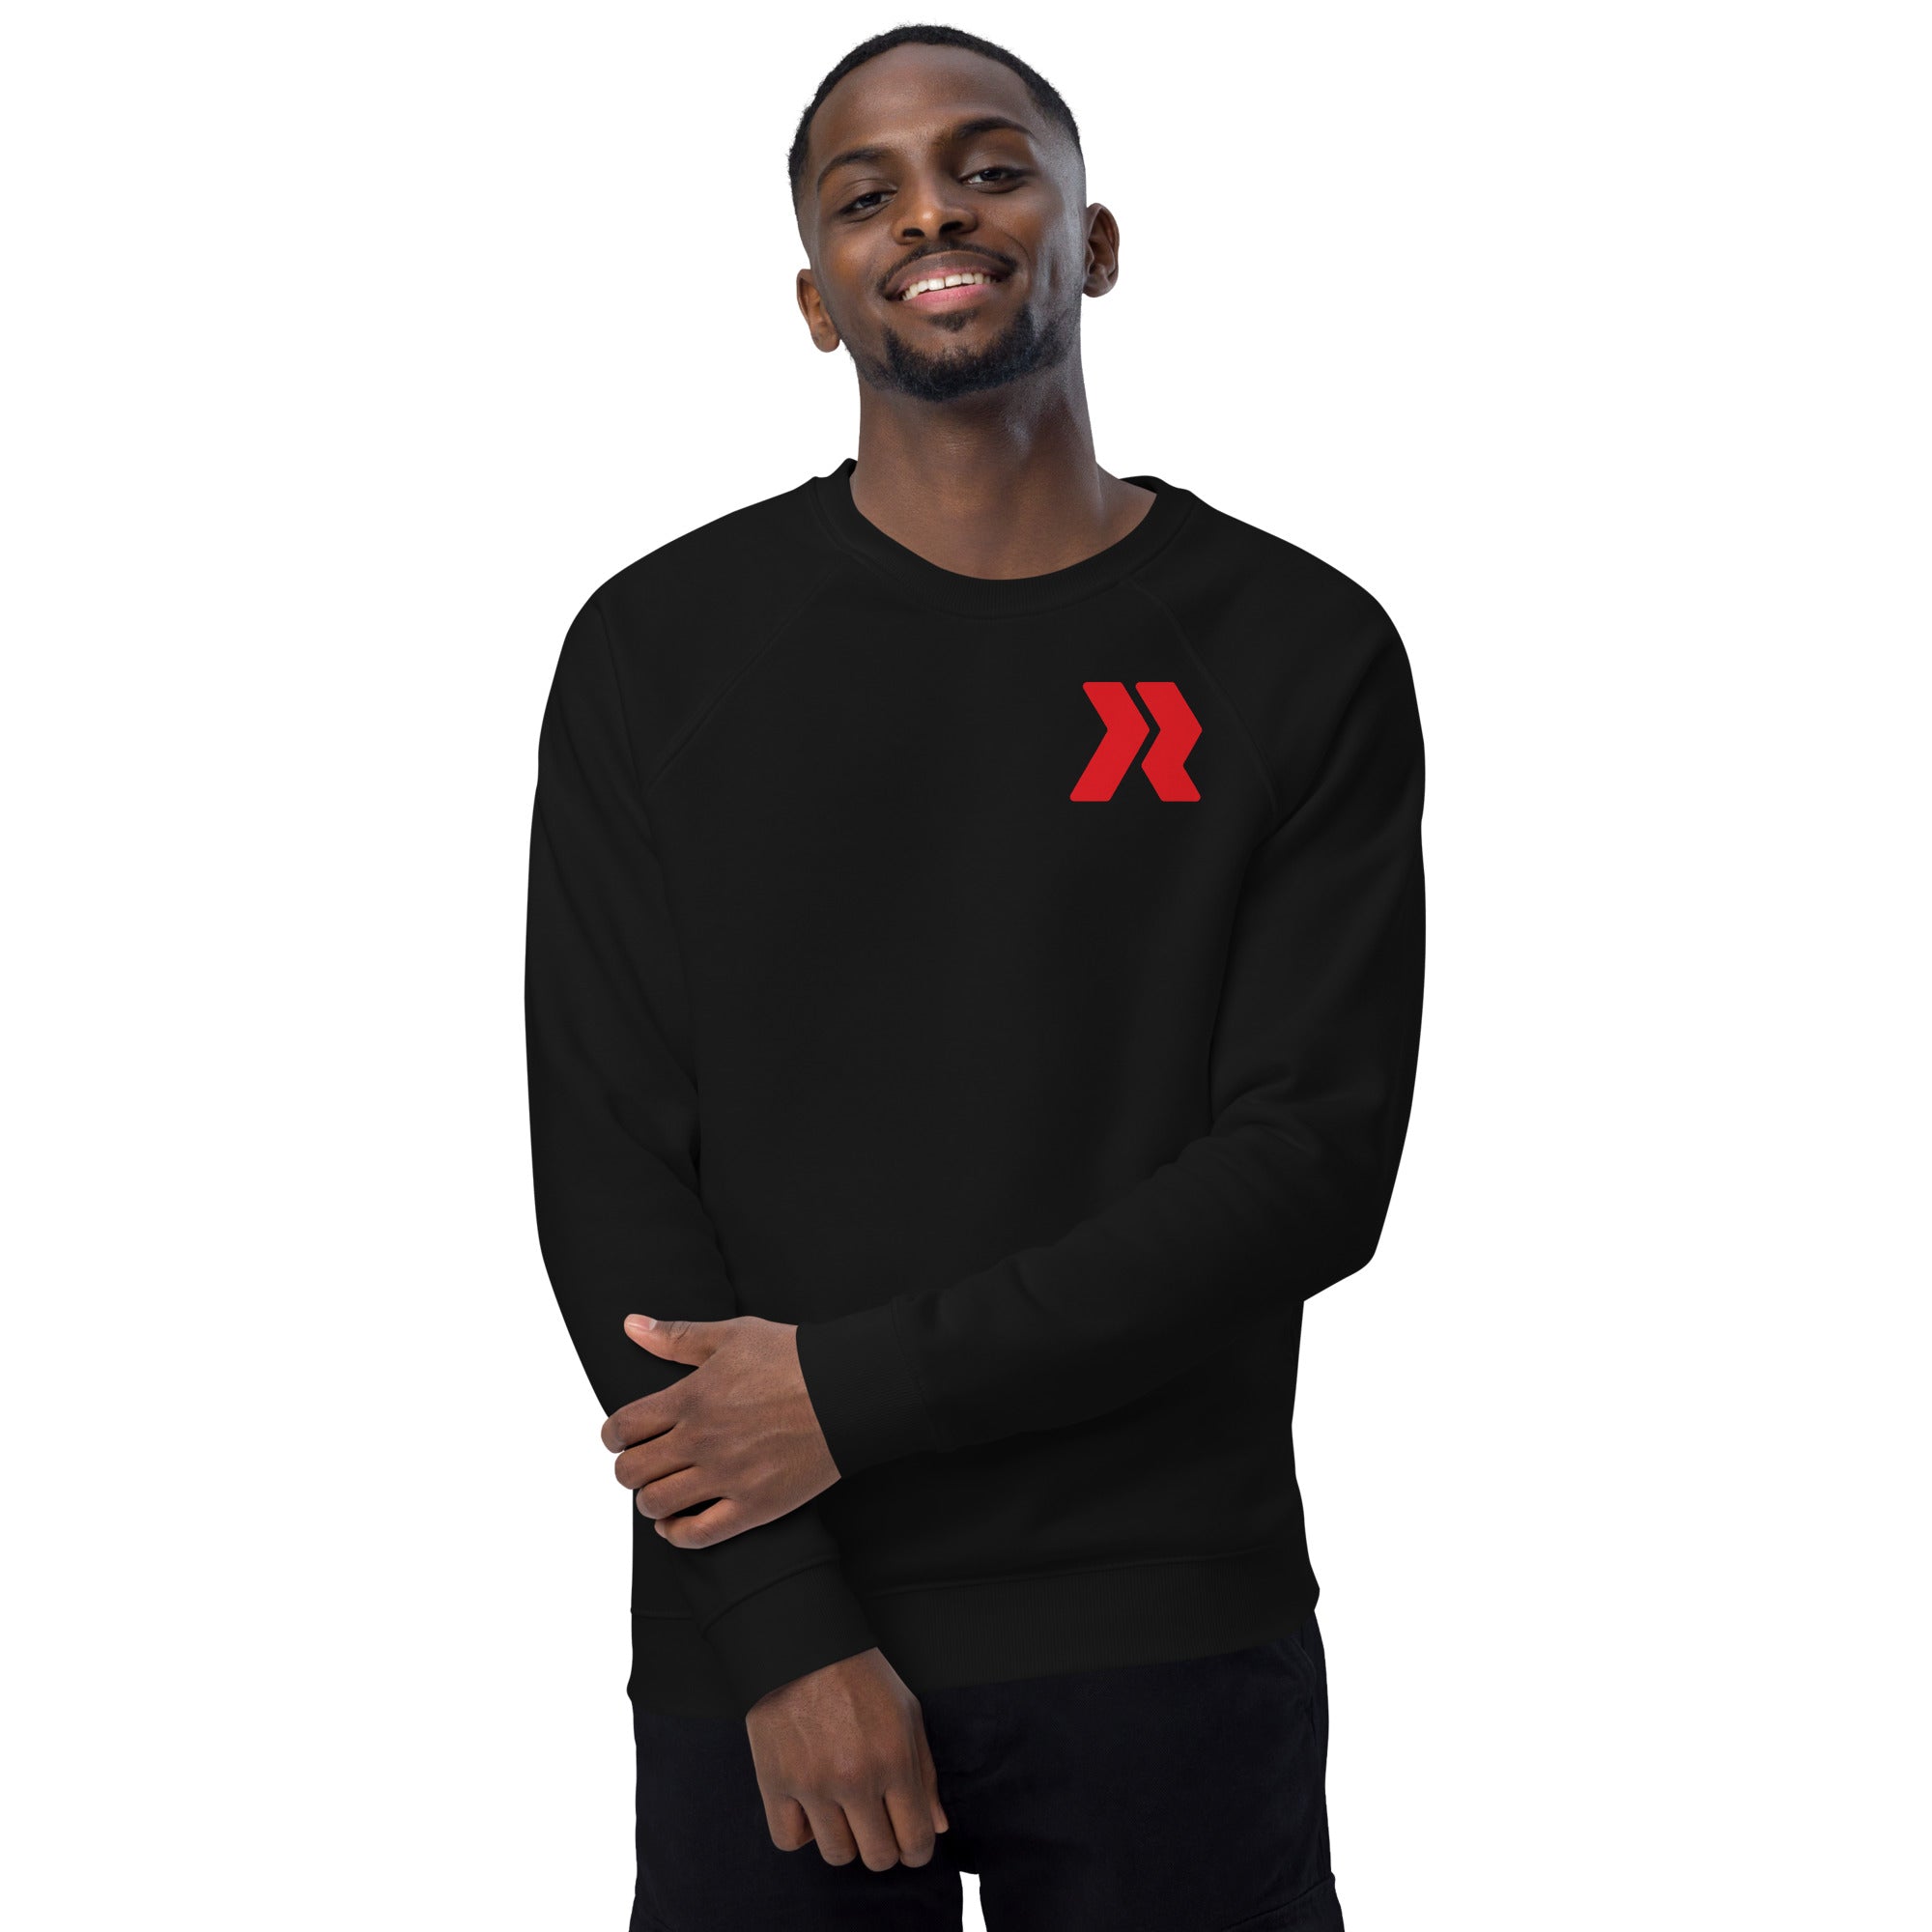 Ft. Myers Logo R - R/W - Black Unisex organic raglan sweatshirt